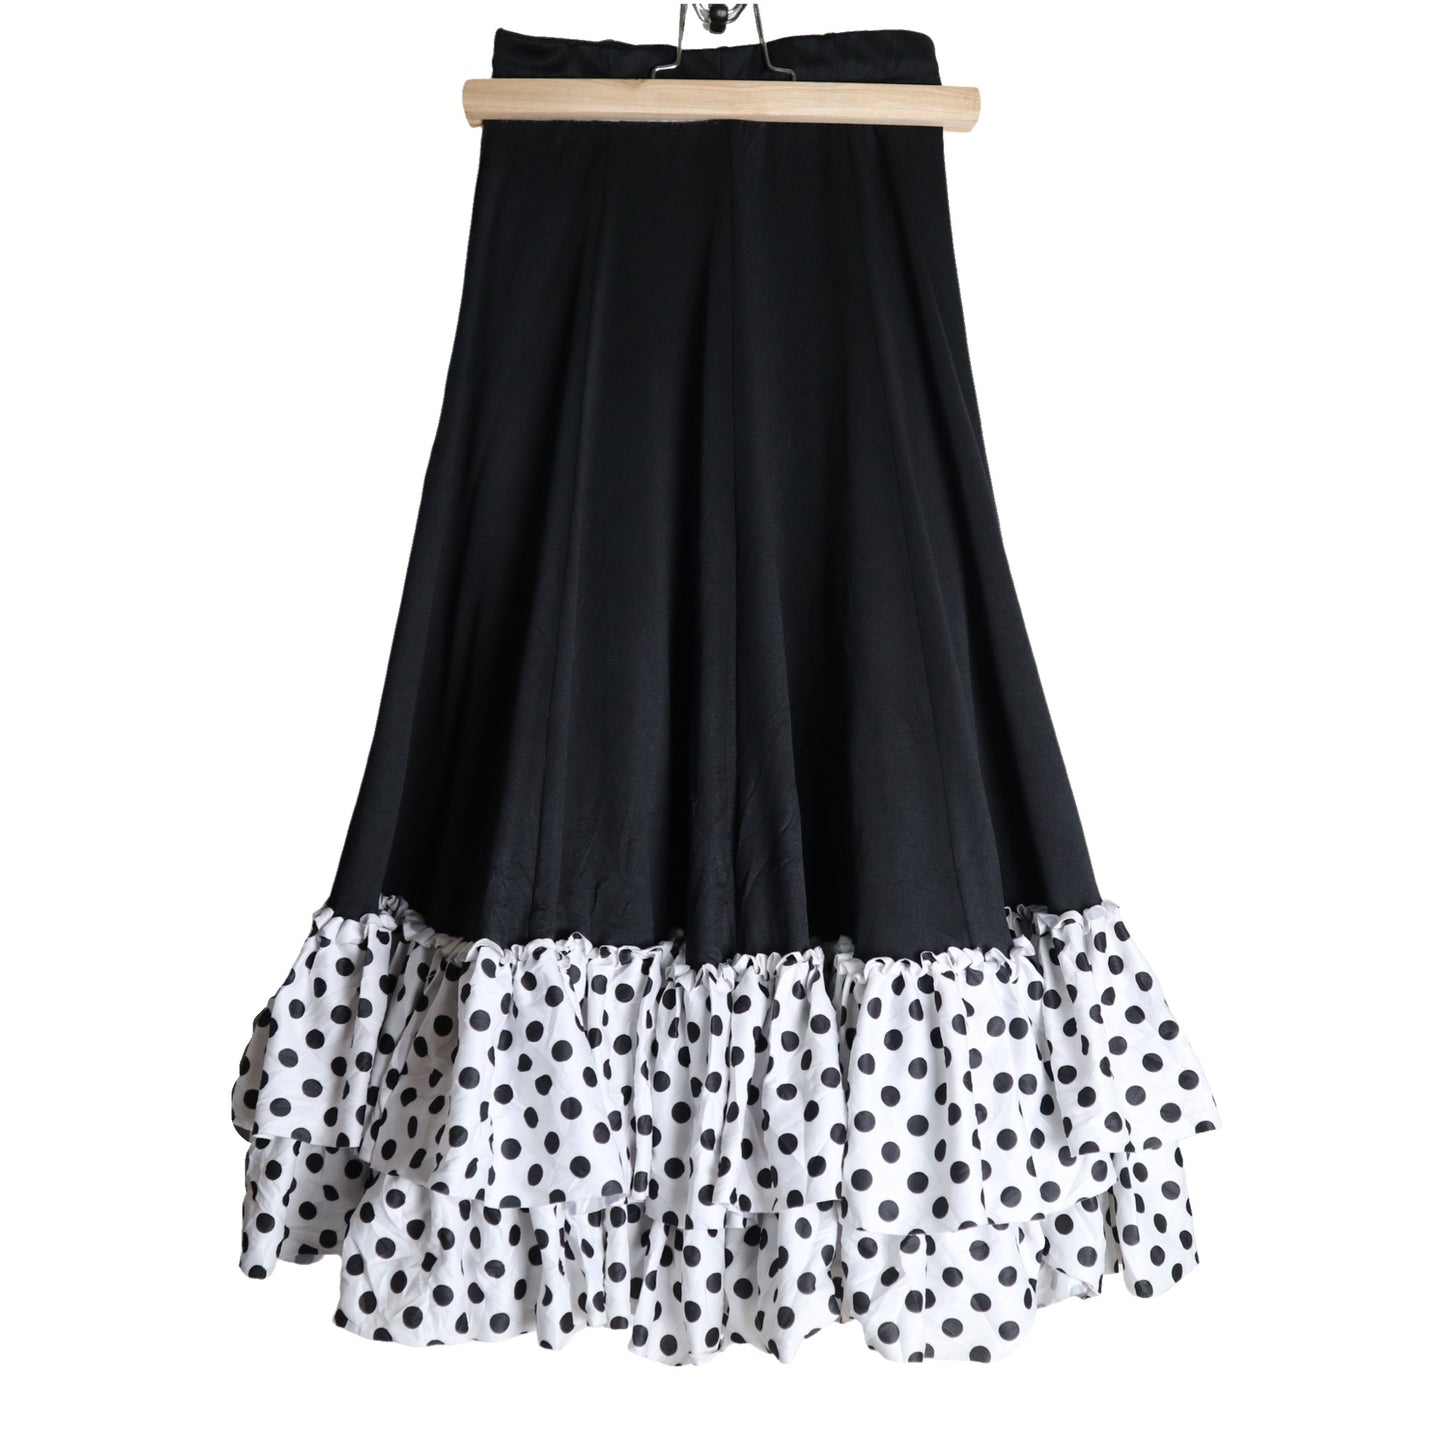 Black and white dotted cake skirt dancing Skirt